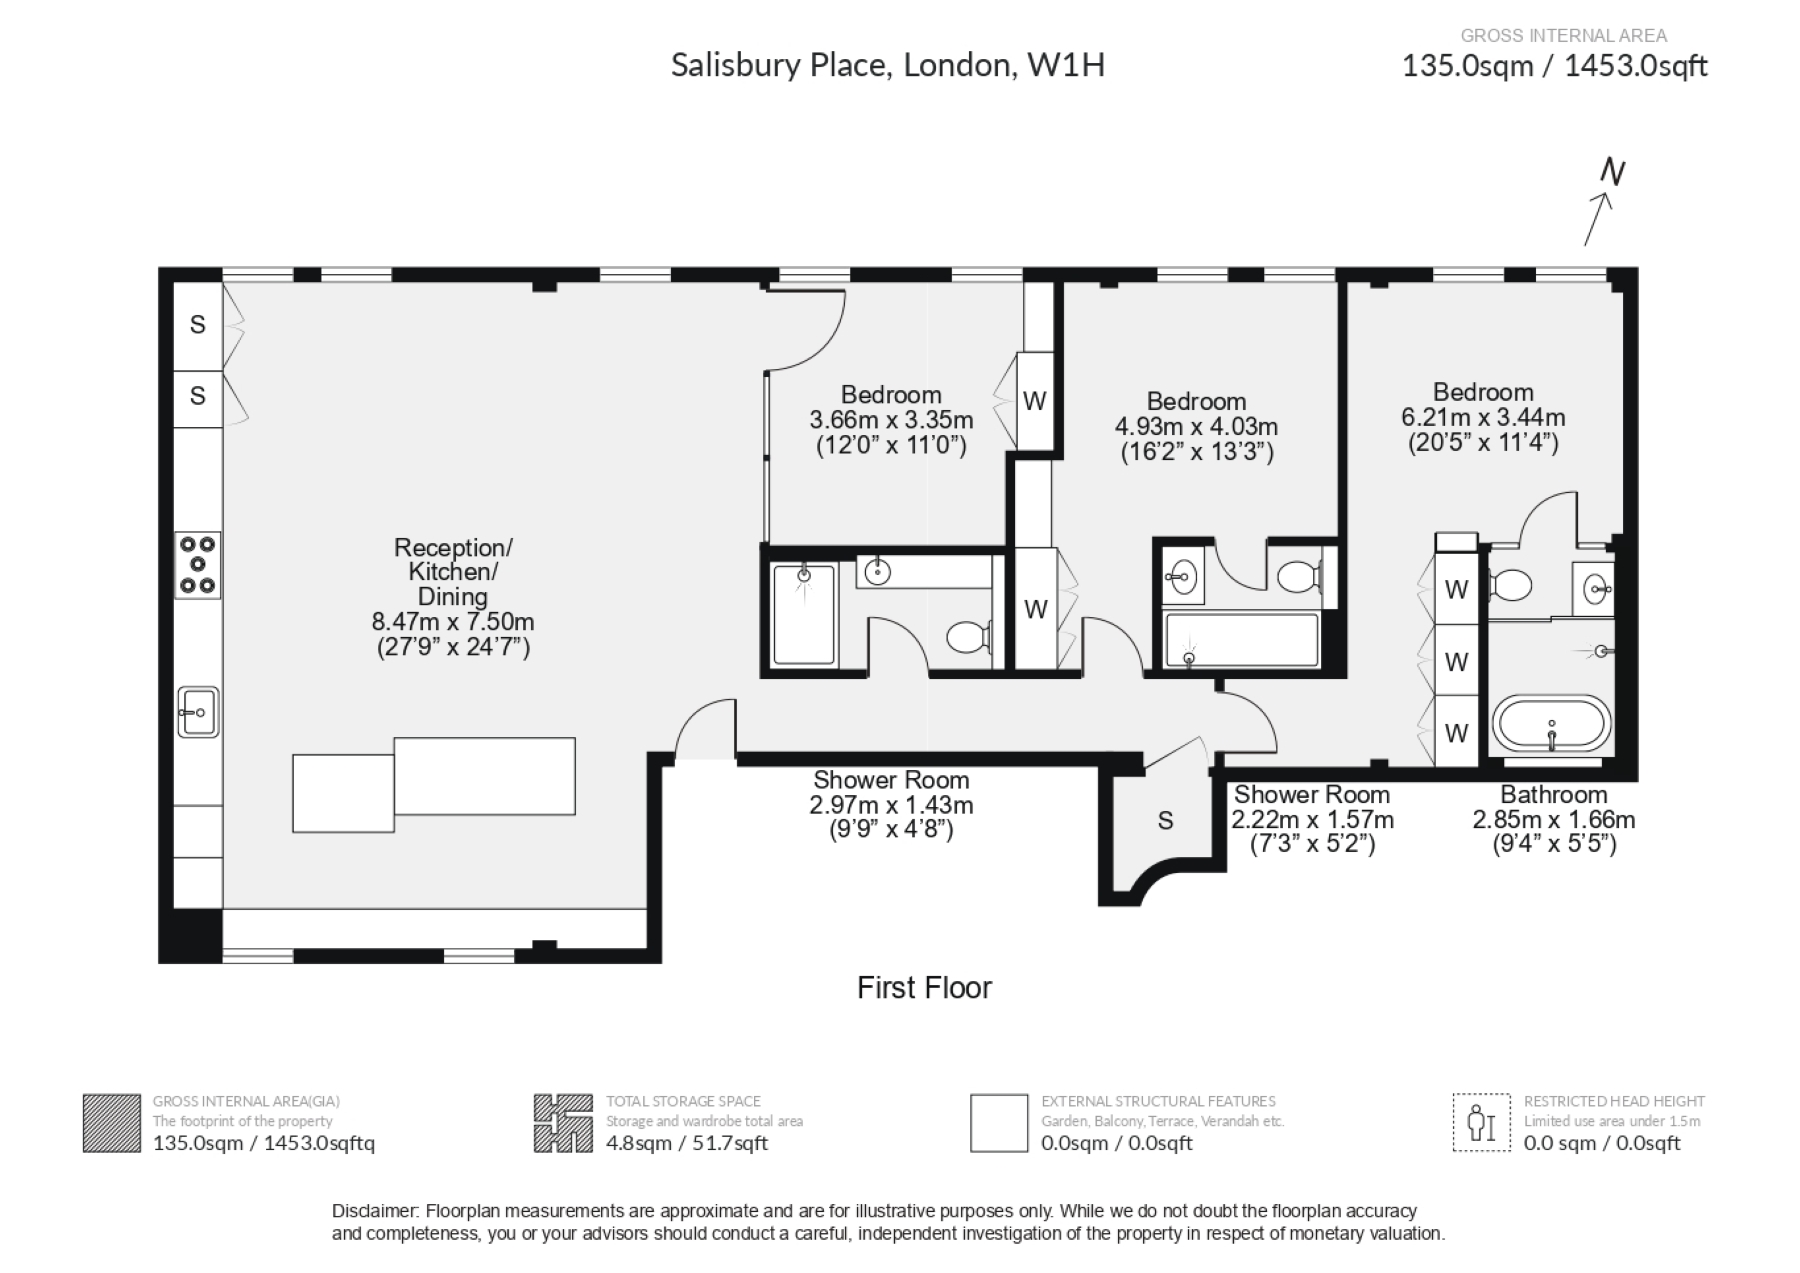 Wonderful three-bedroom apartment set on a coveted mews in Marylebone